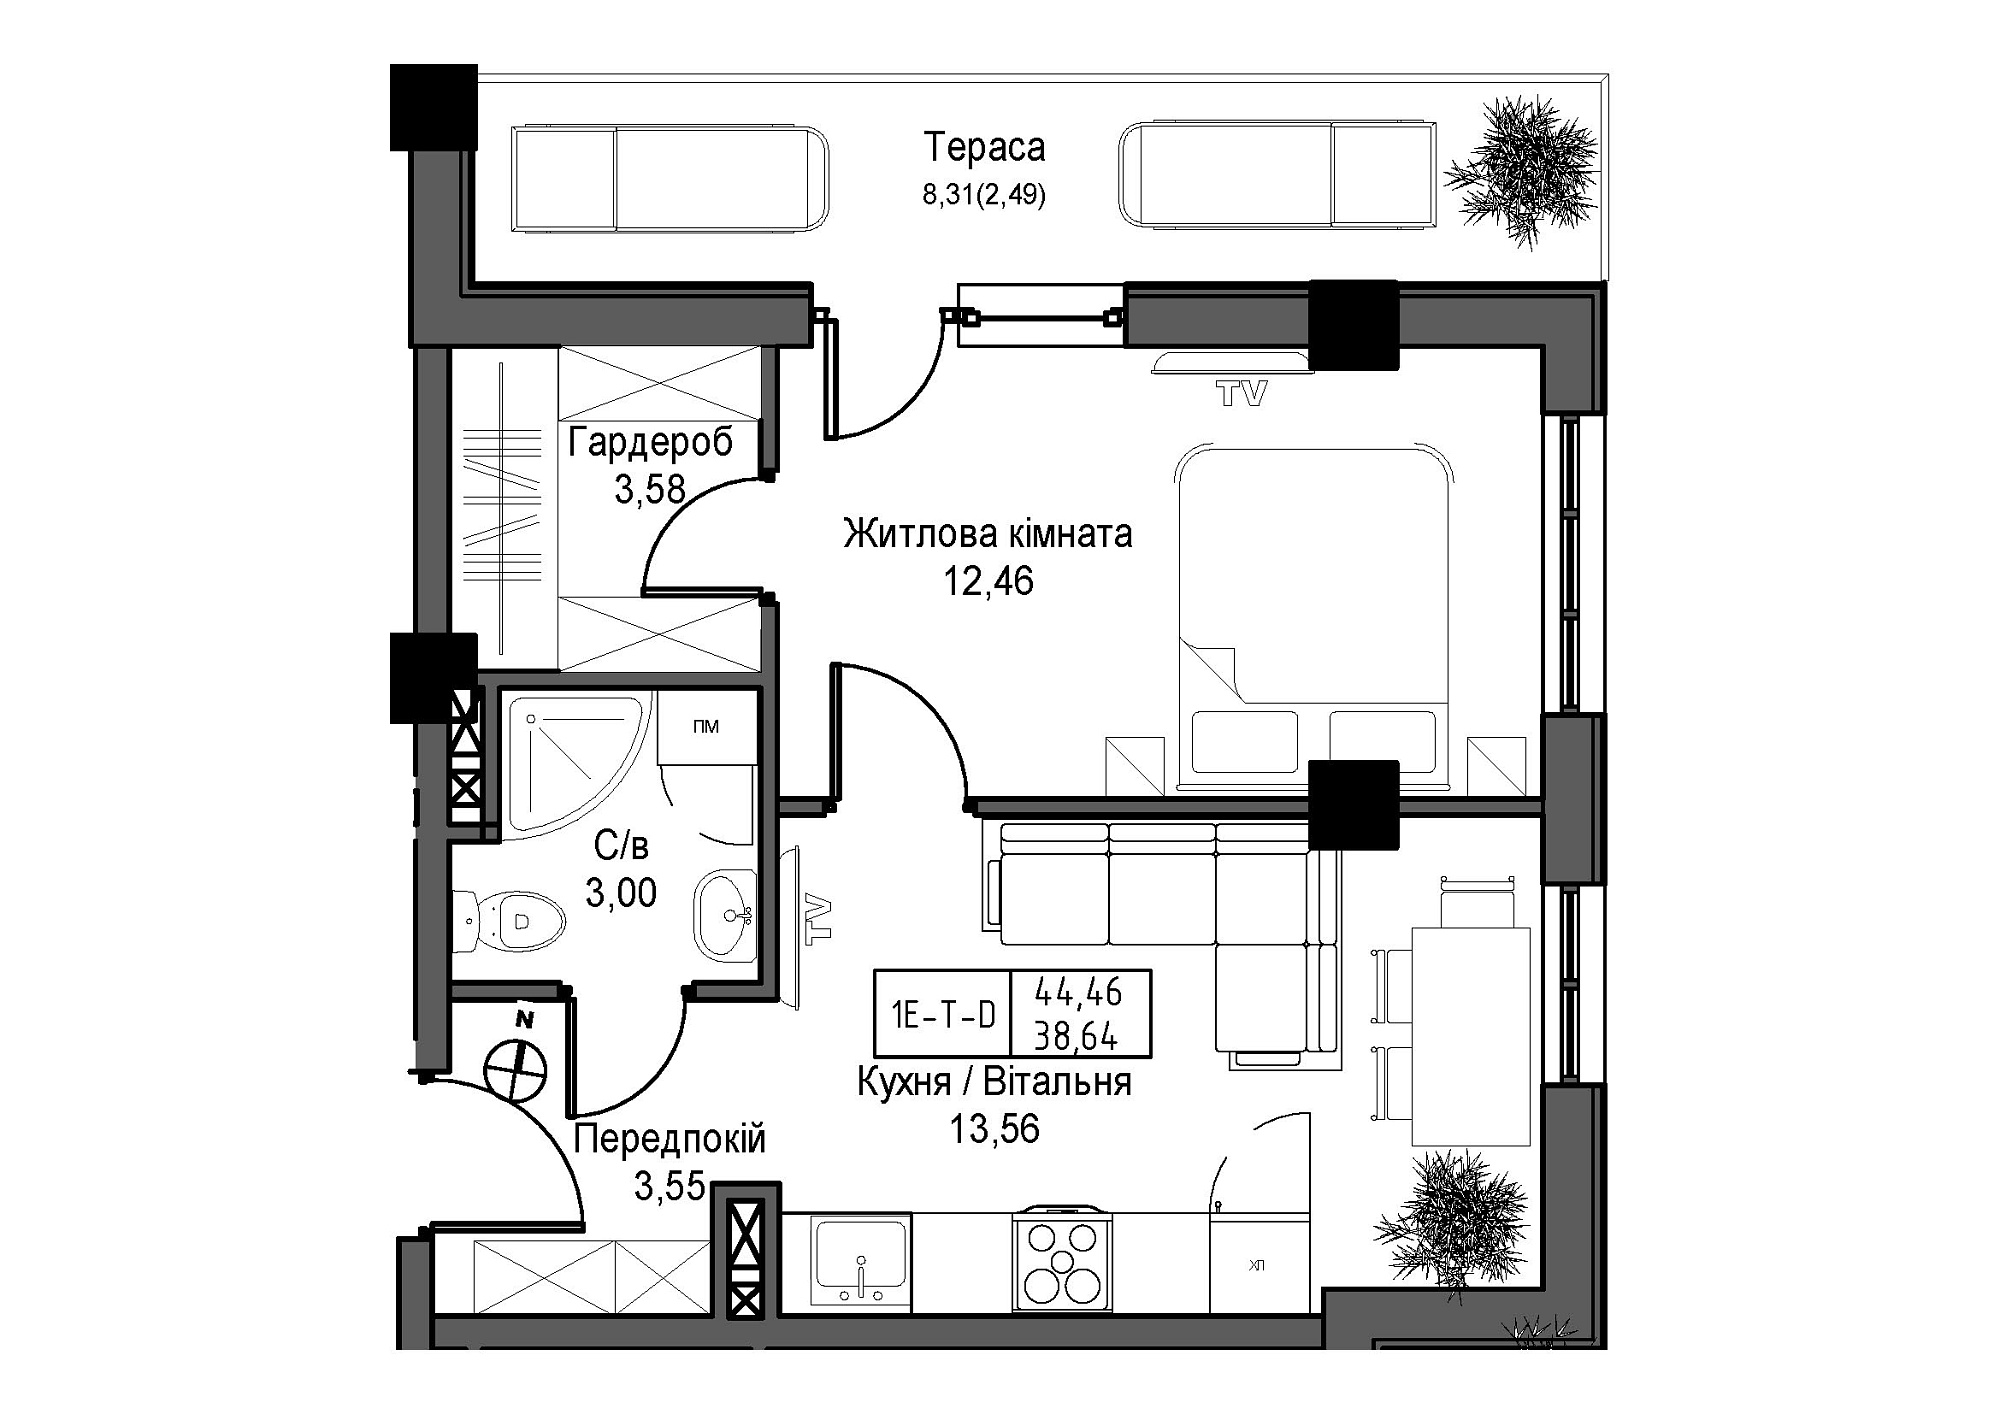 Планування 1-к квартира площею 38.64м2, UM-007-07/0003.